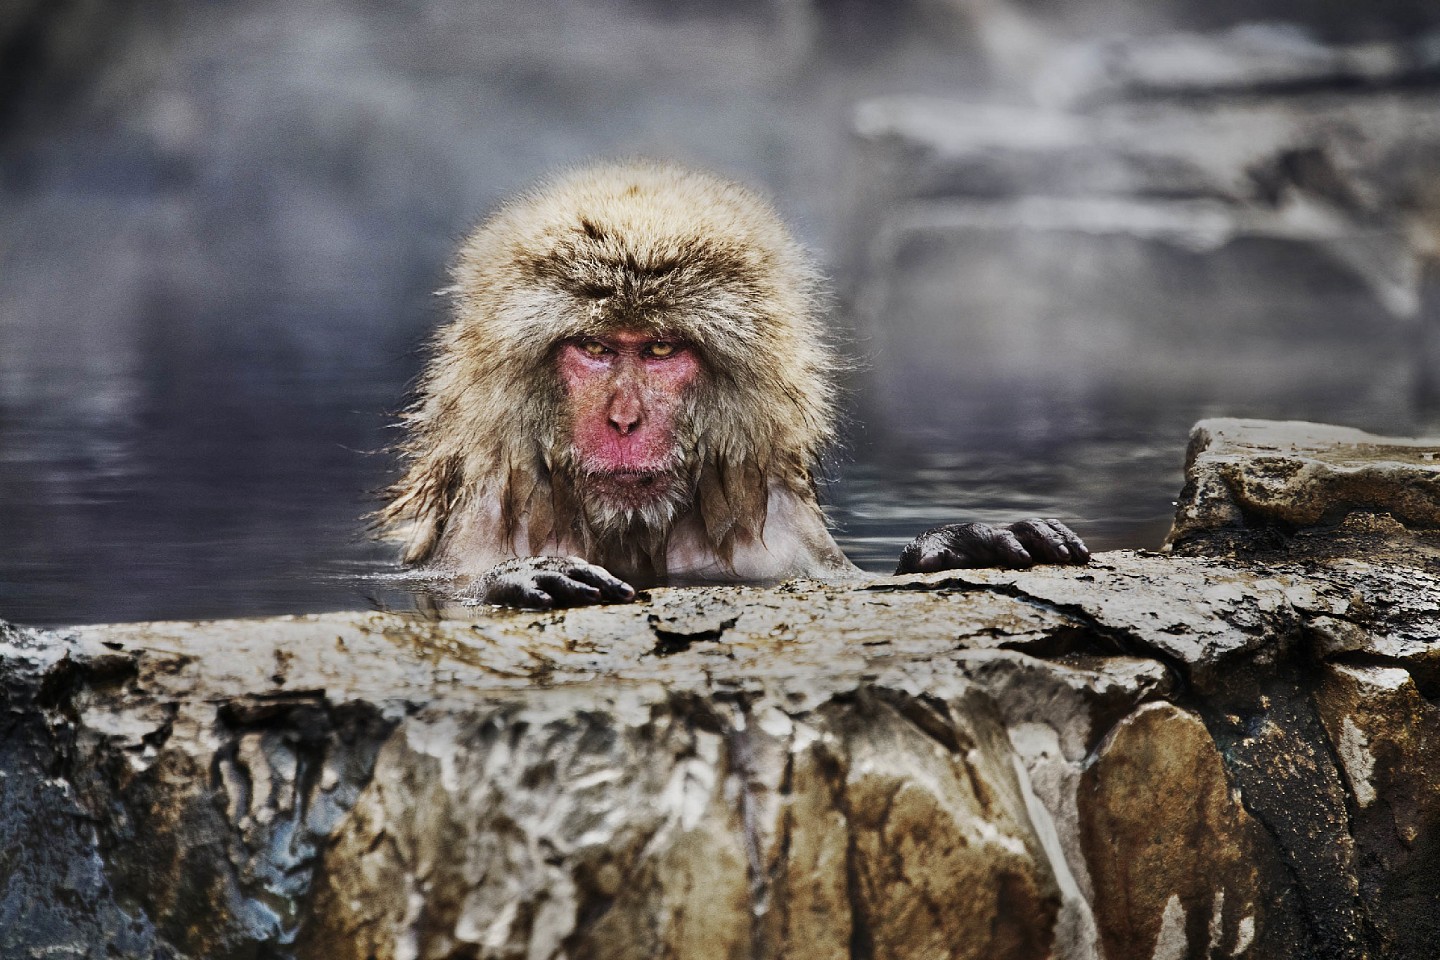 Steve McCurry, Snow Monkey in Jigokudani Yaen-koen Park, Japan, 2018
FujiFlex Crystal Archive Print, 30 x 40 in. (76.2 x 101.6 cm)
JAPAN-10315